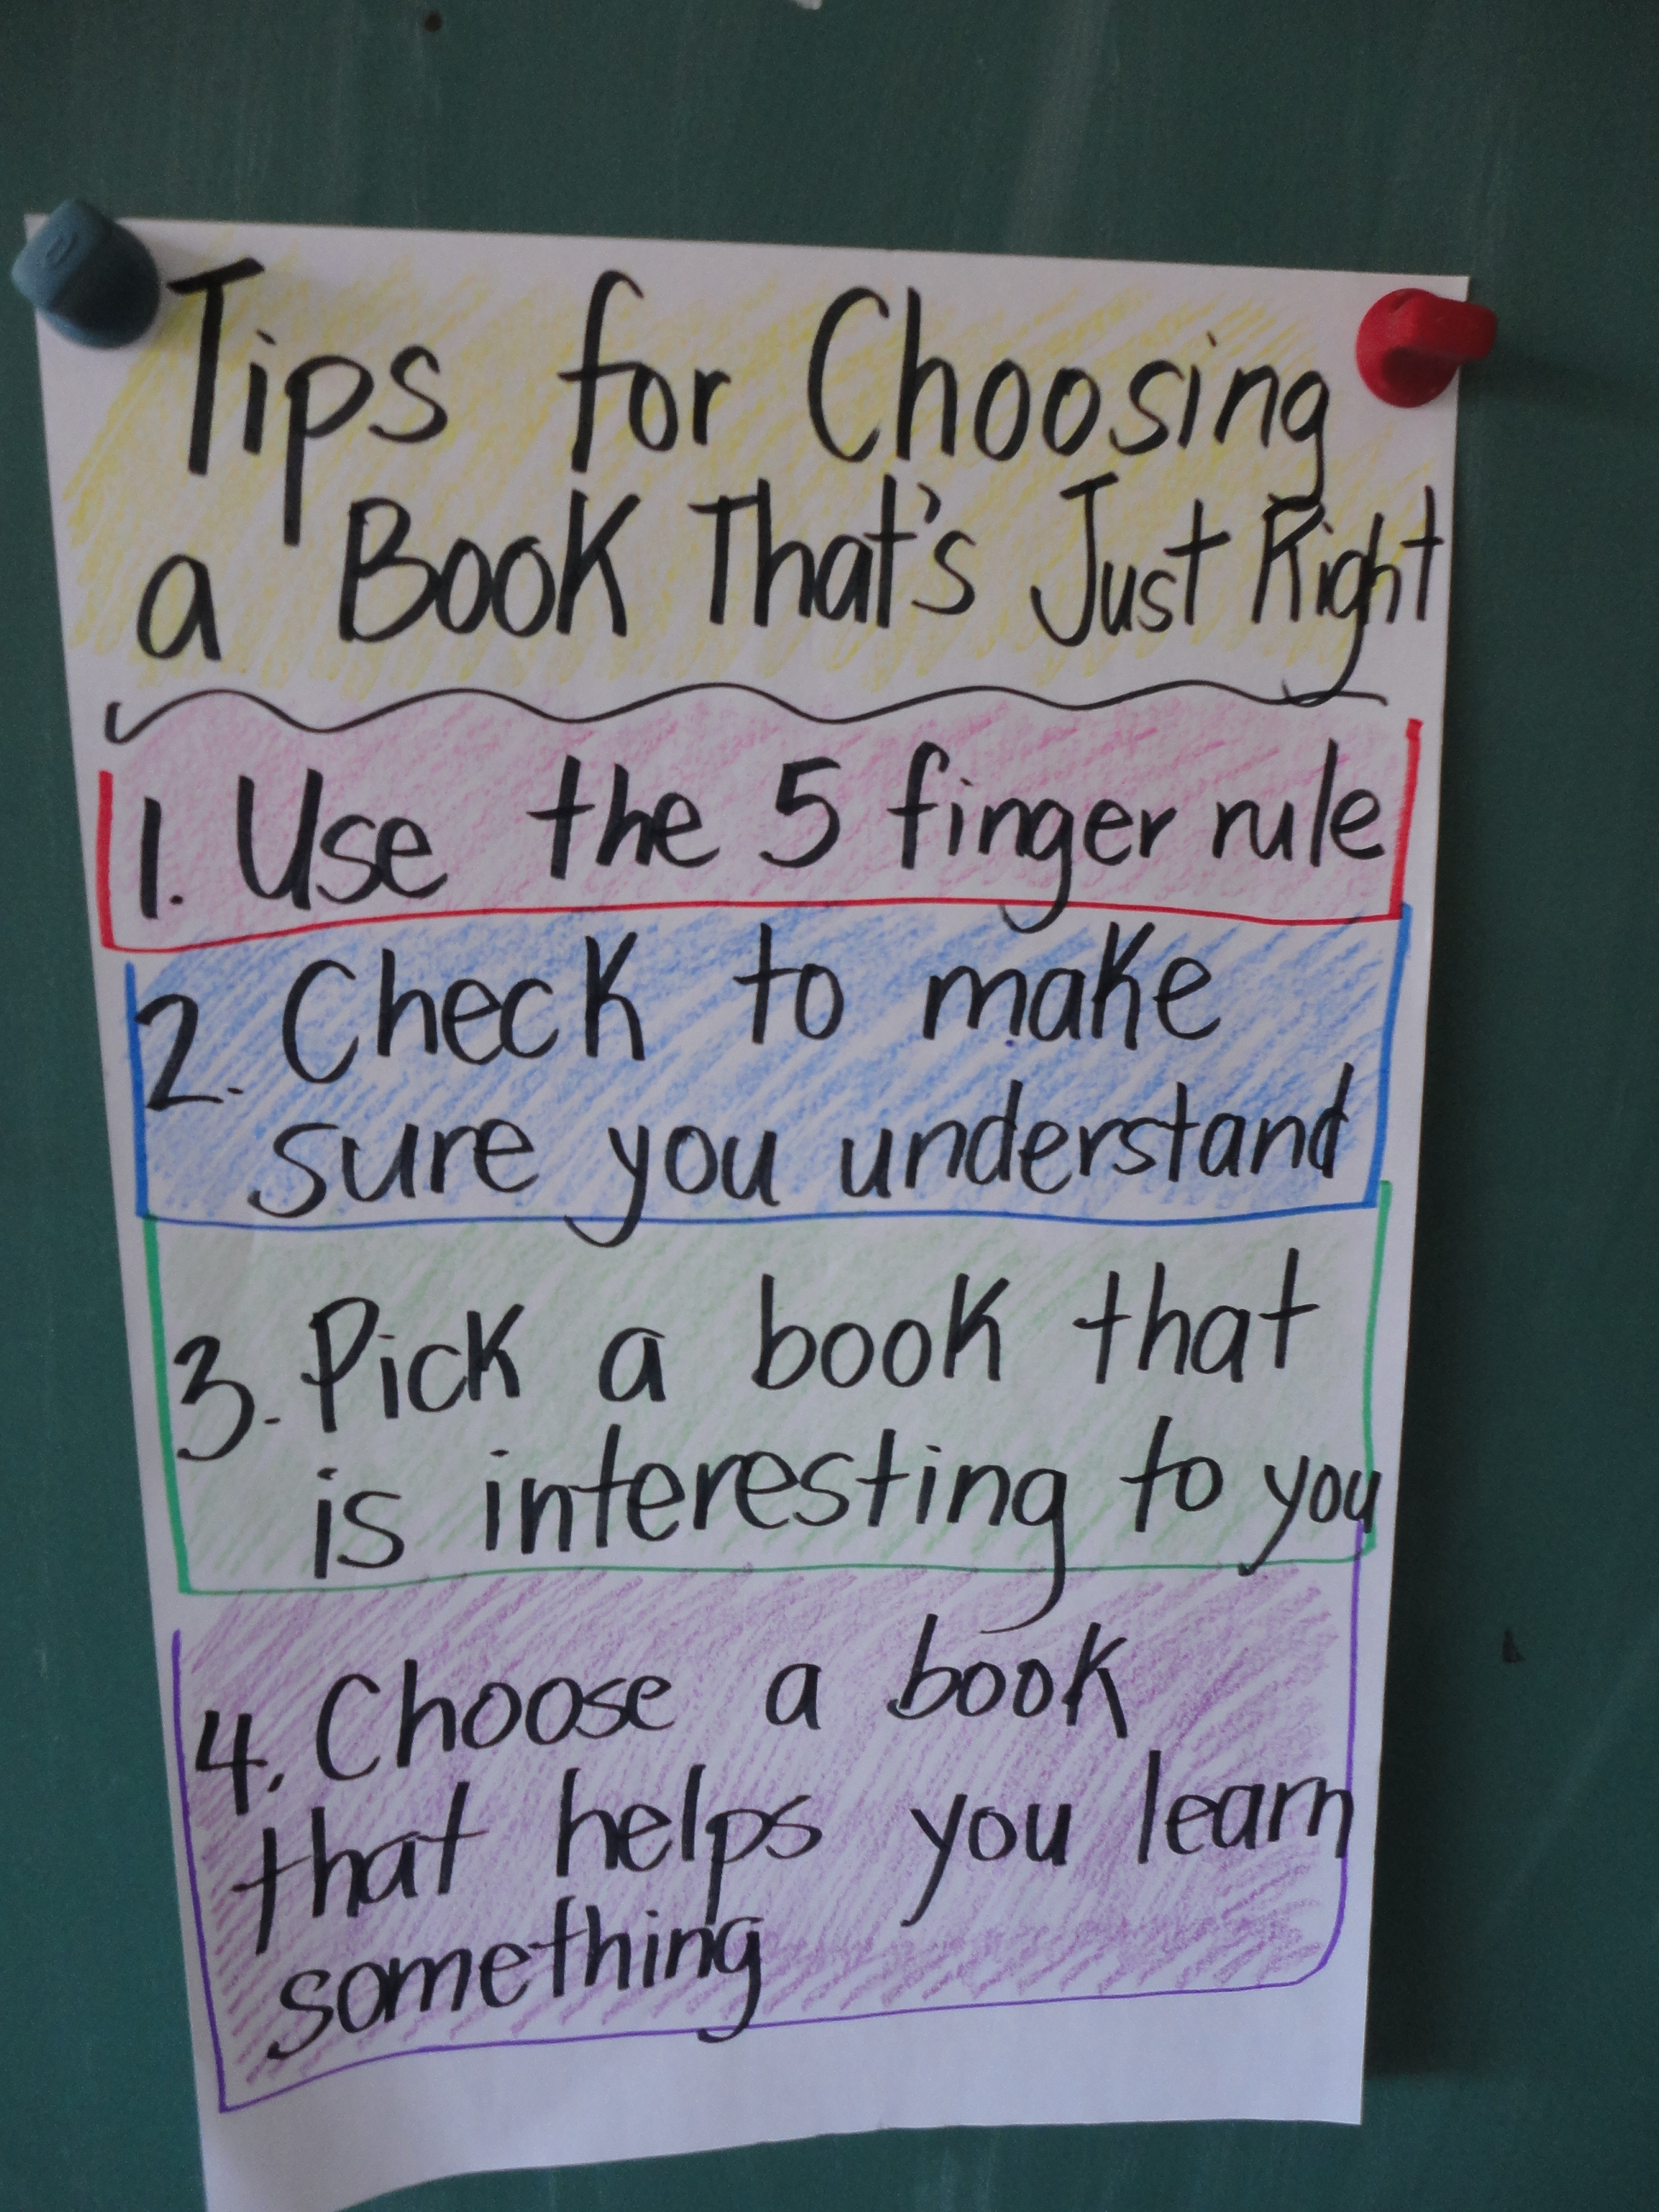 Choosing A Book Anchor Chart